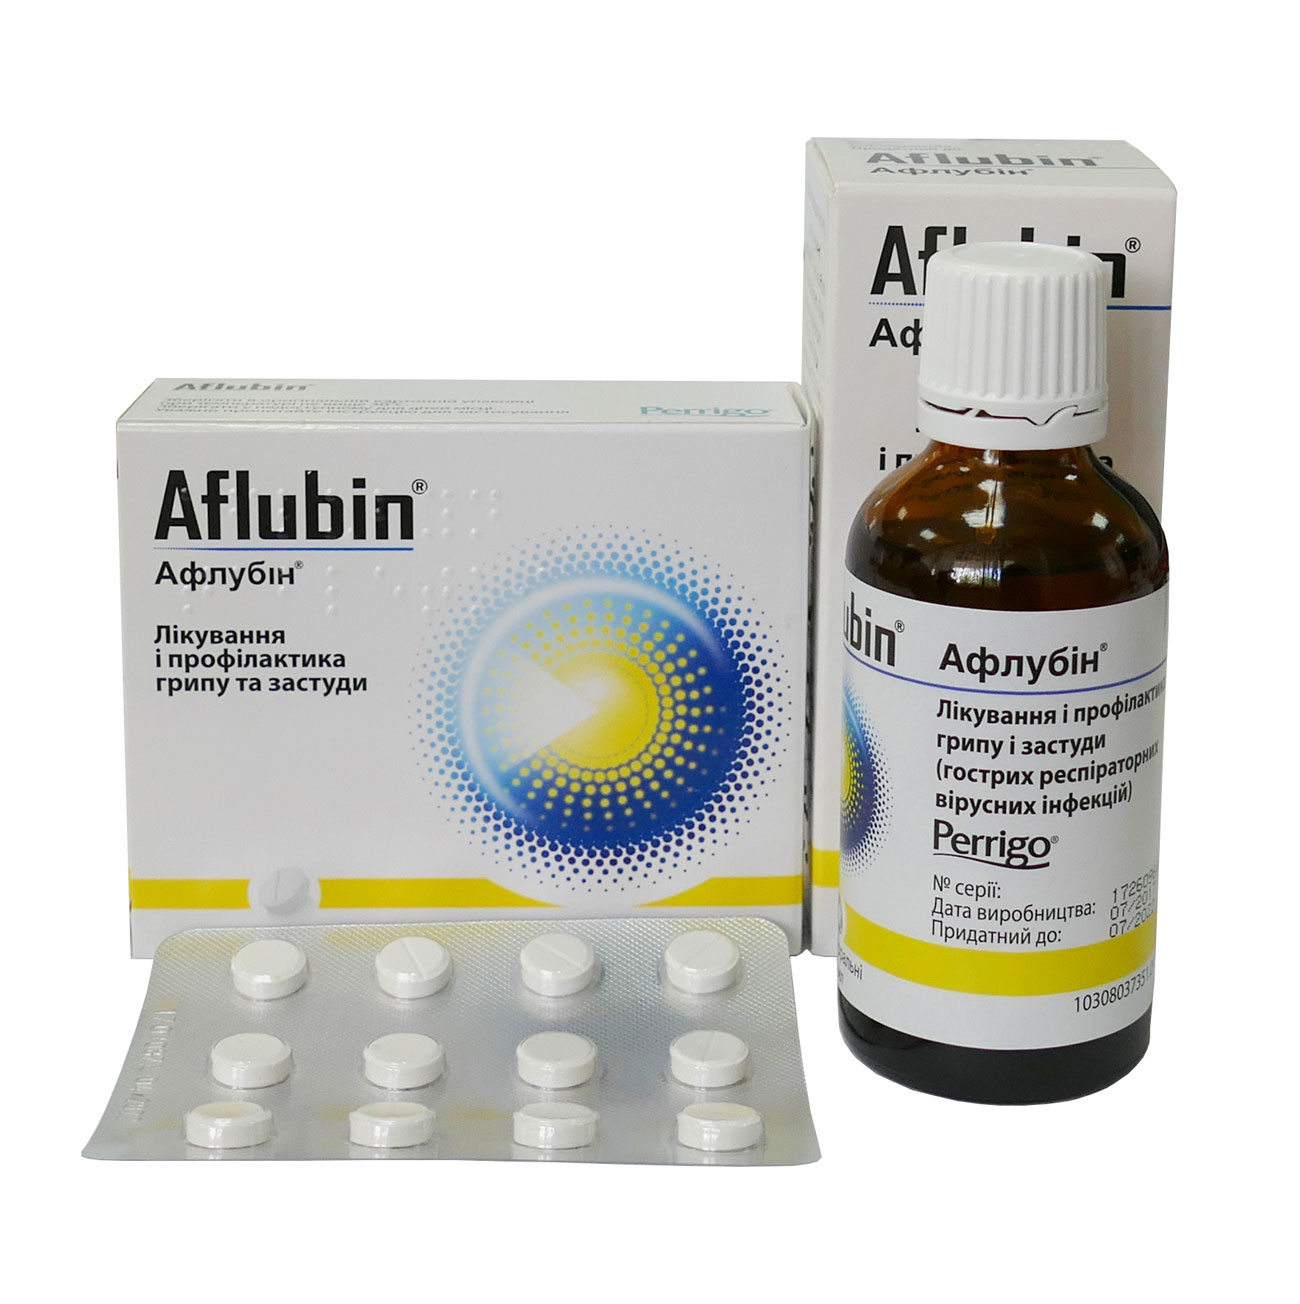 Афлубин: капли и таблетки - инструкция, цена, аналоги, дозировка и состав